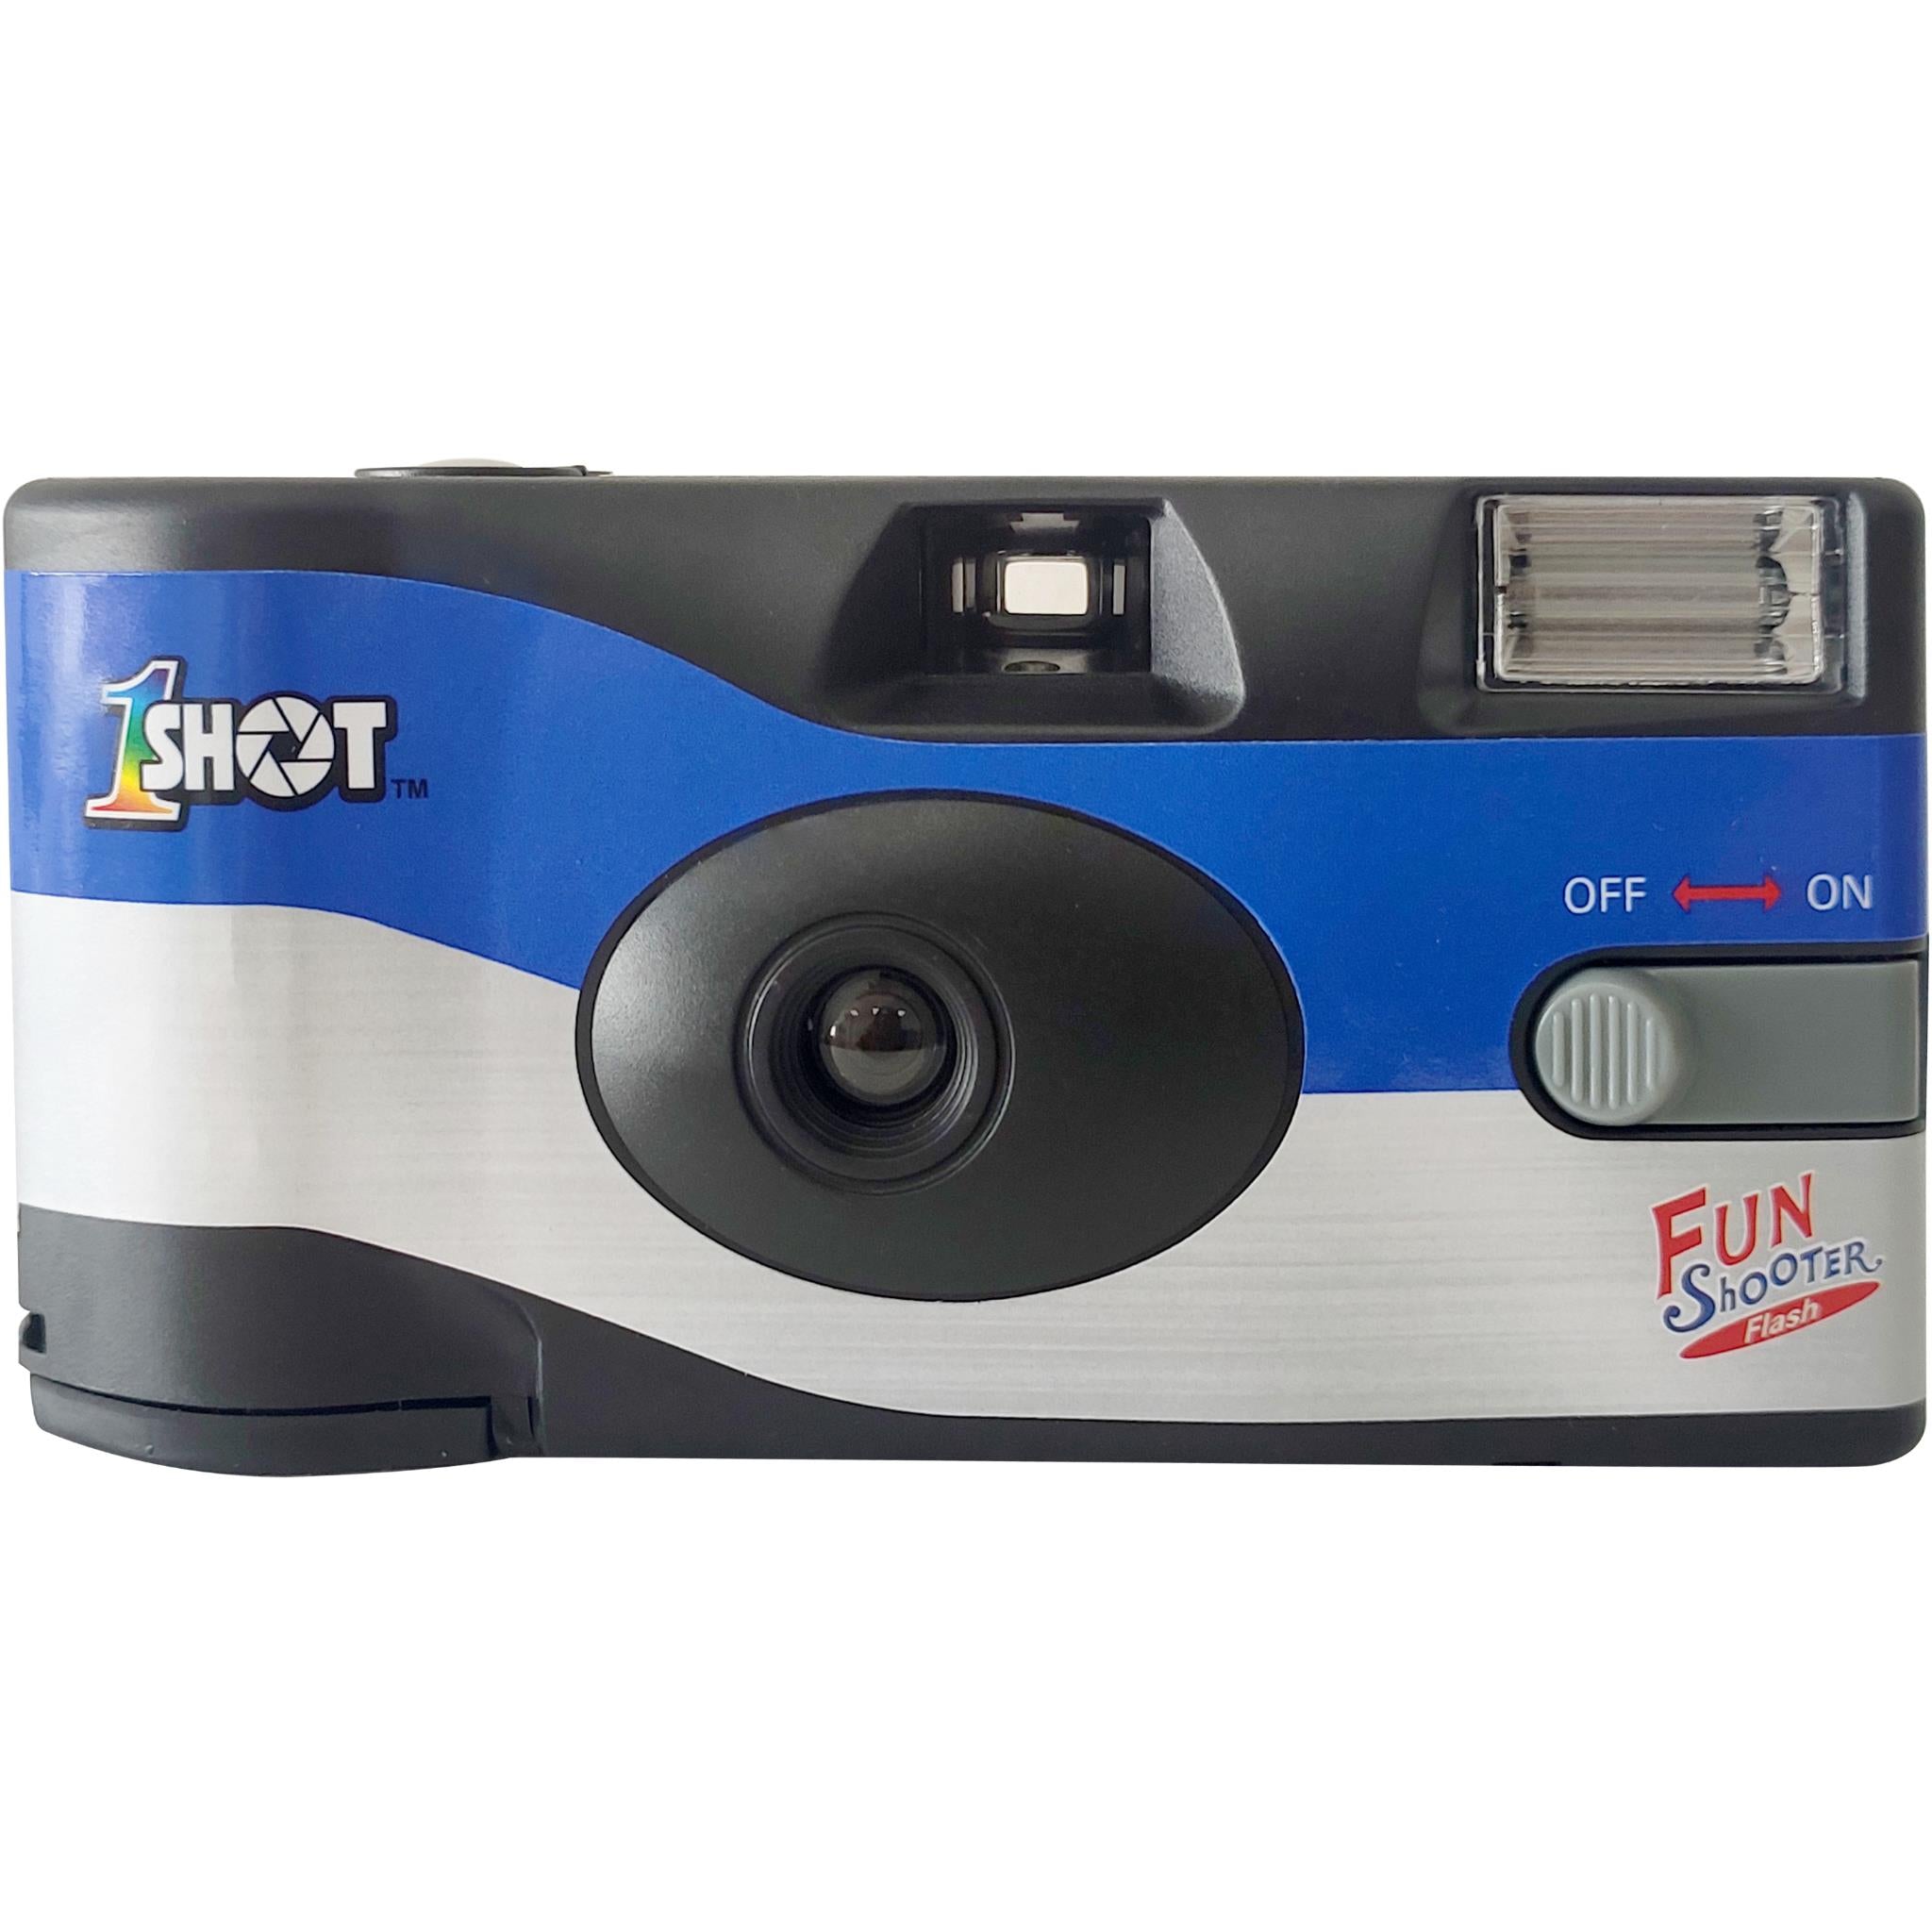 polaroid 1 shot disposable film camera with flash